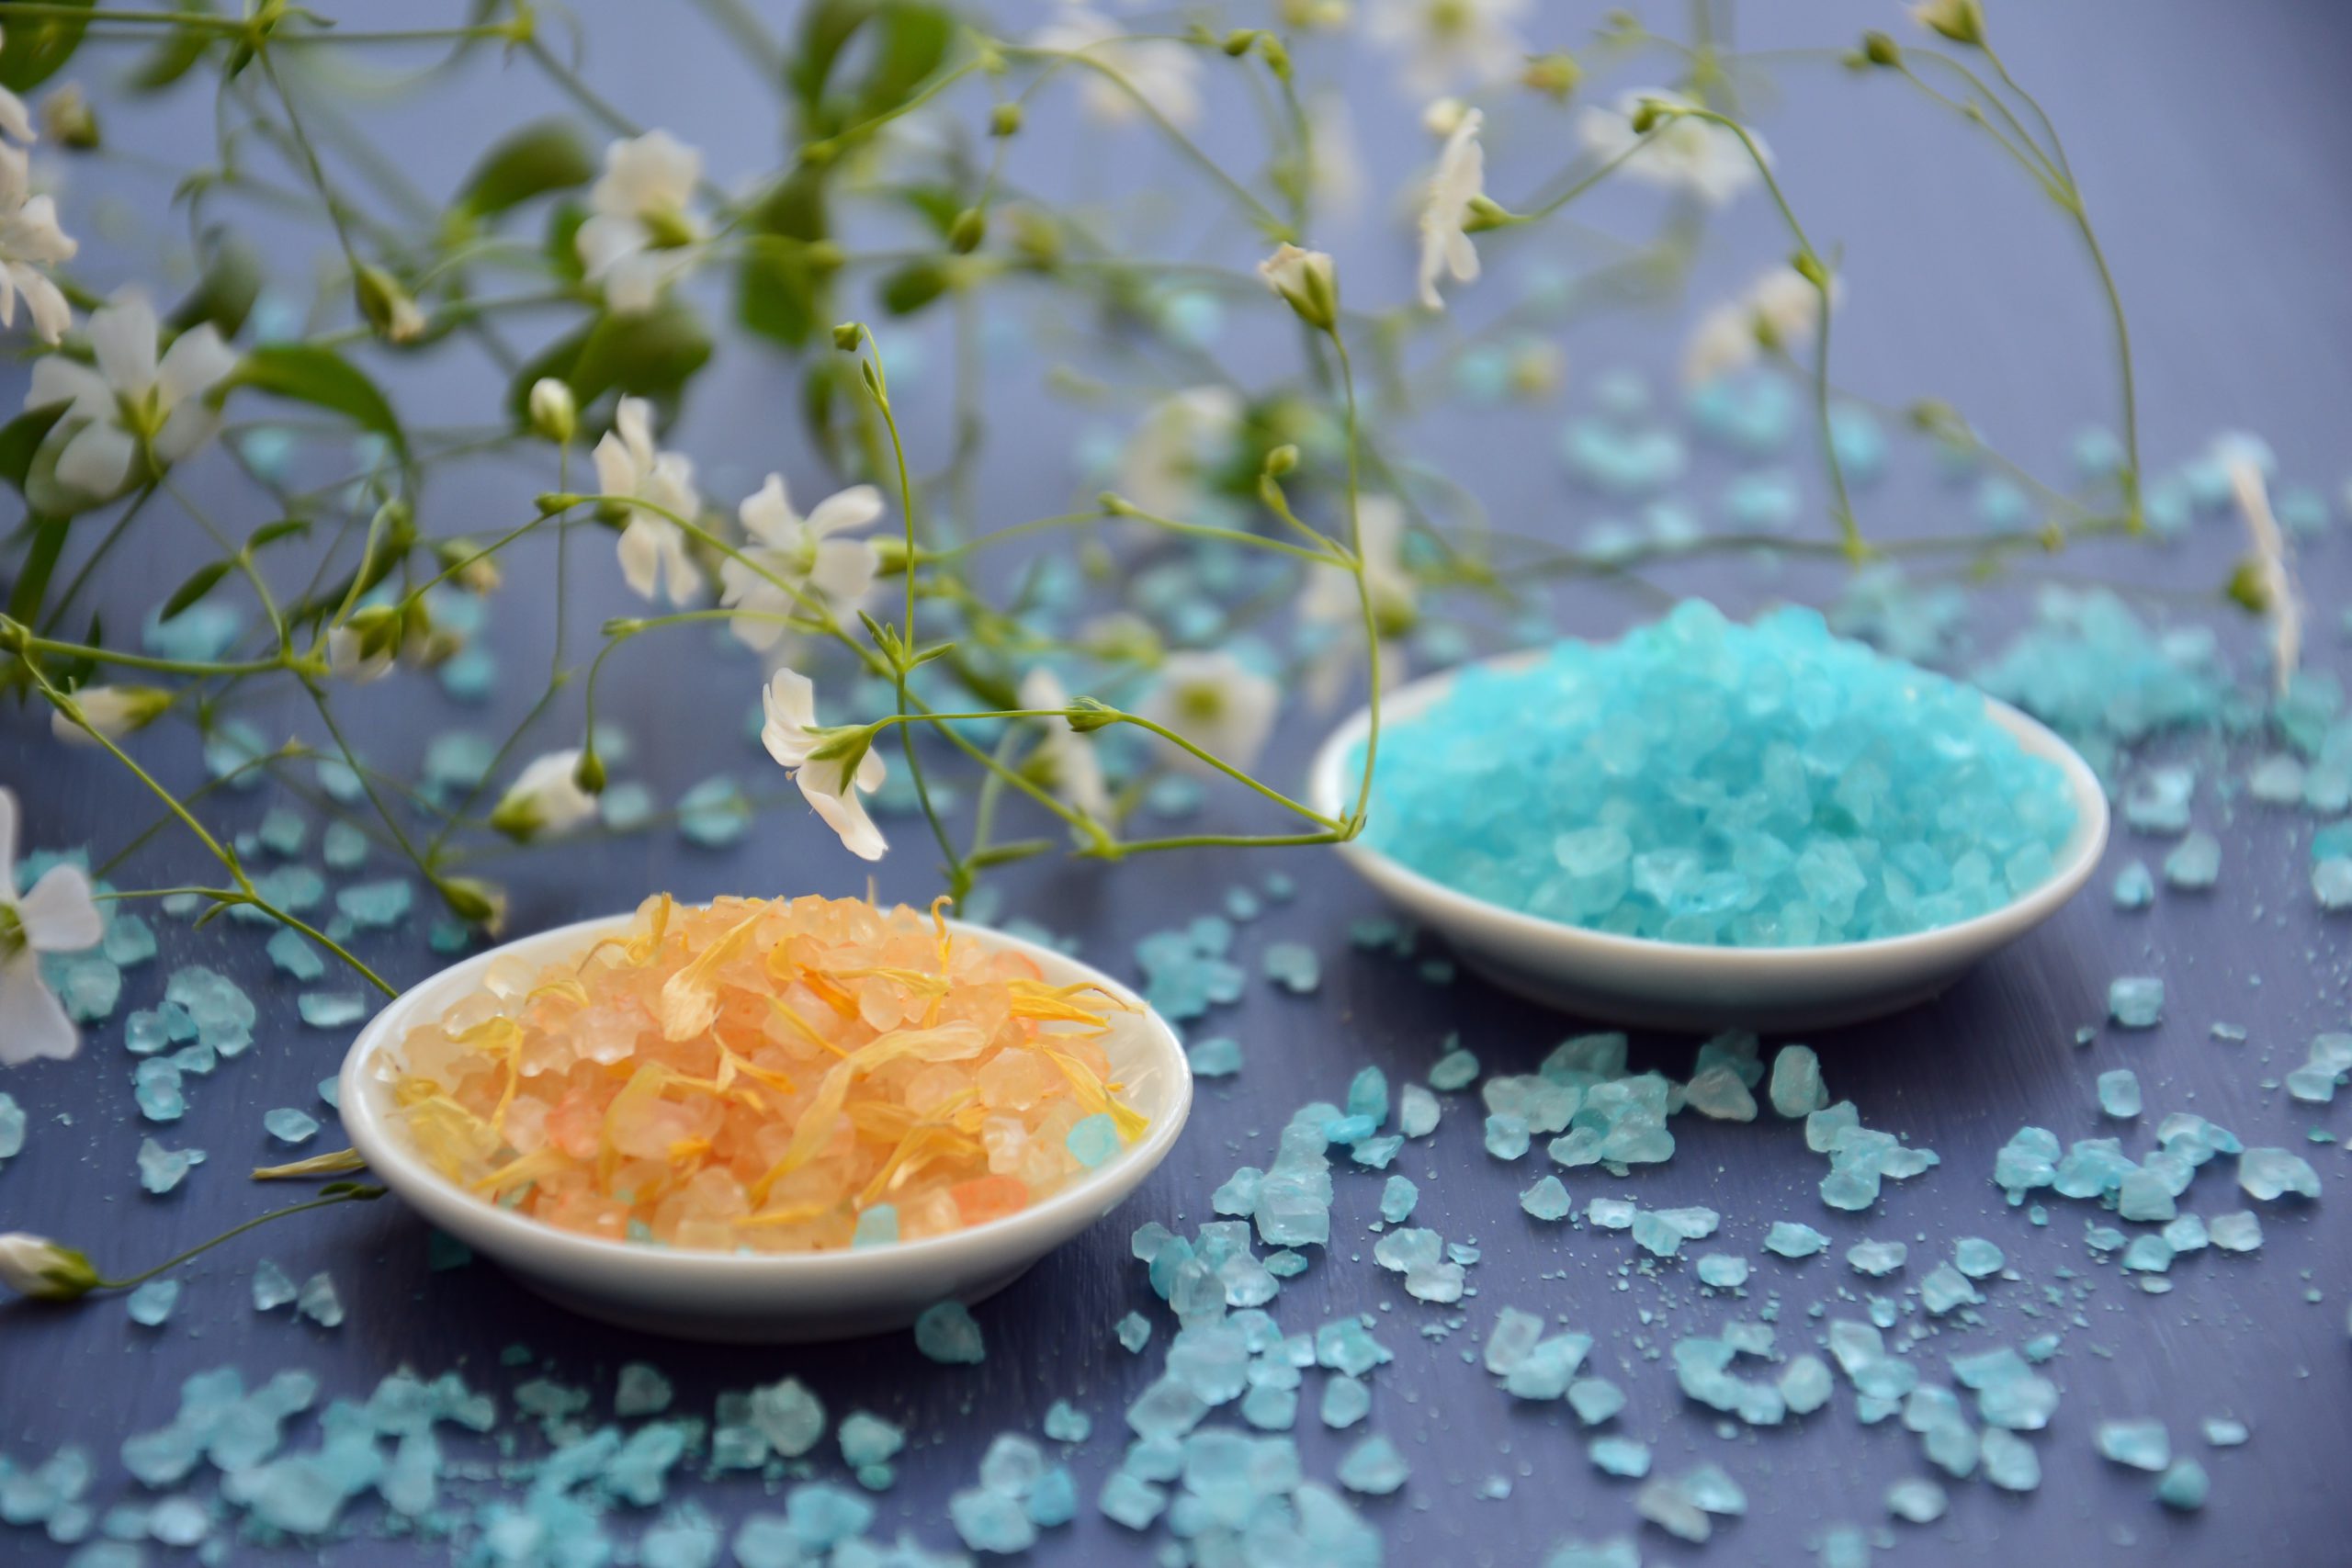 Soluble salt and insoluble salt